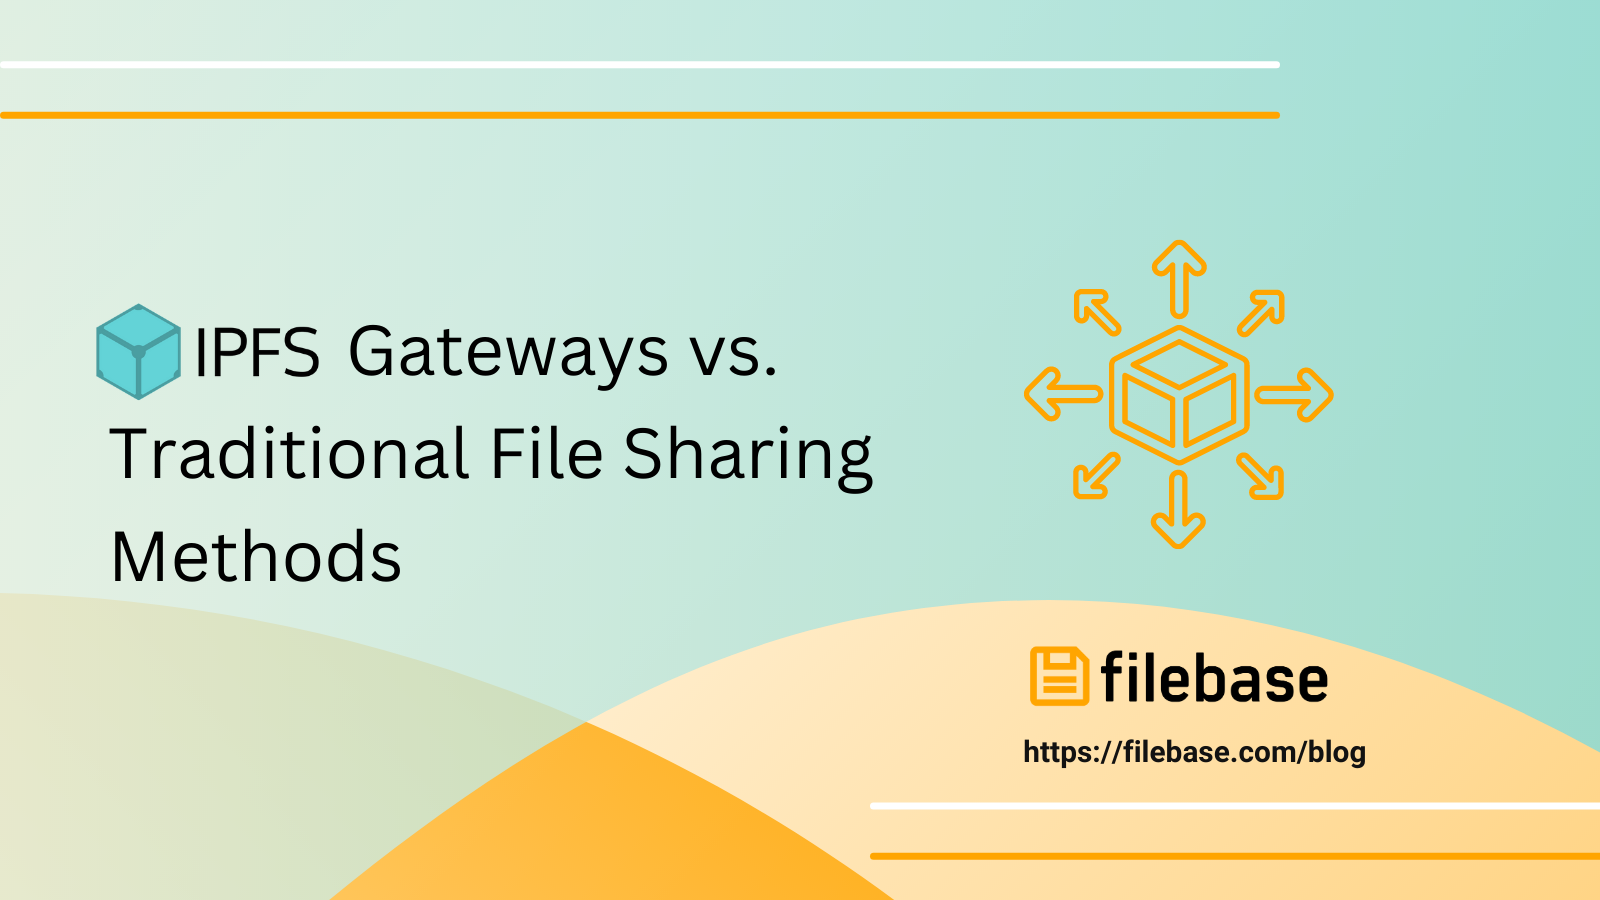 IPFS Gateways vs Traditional File Sharing Methods